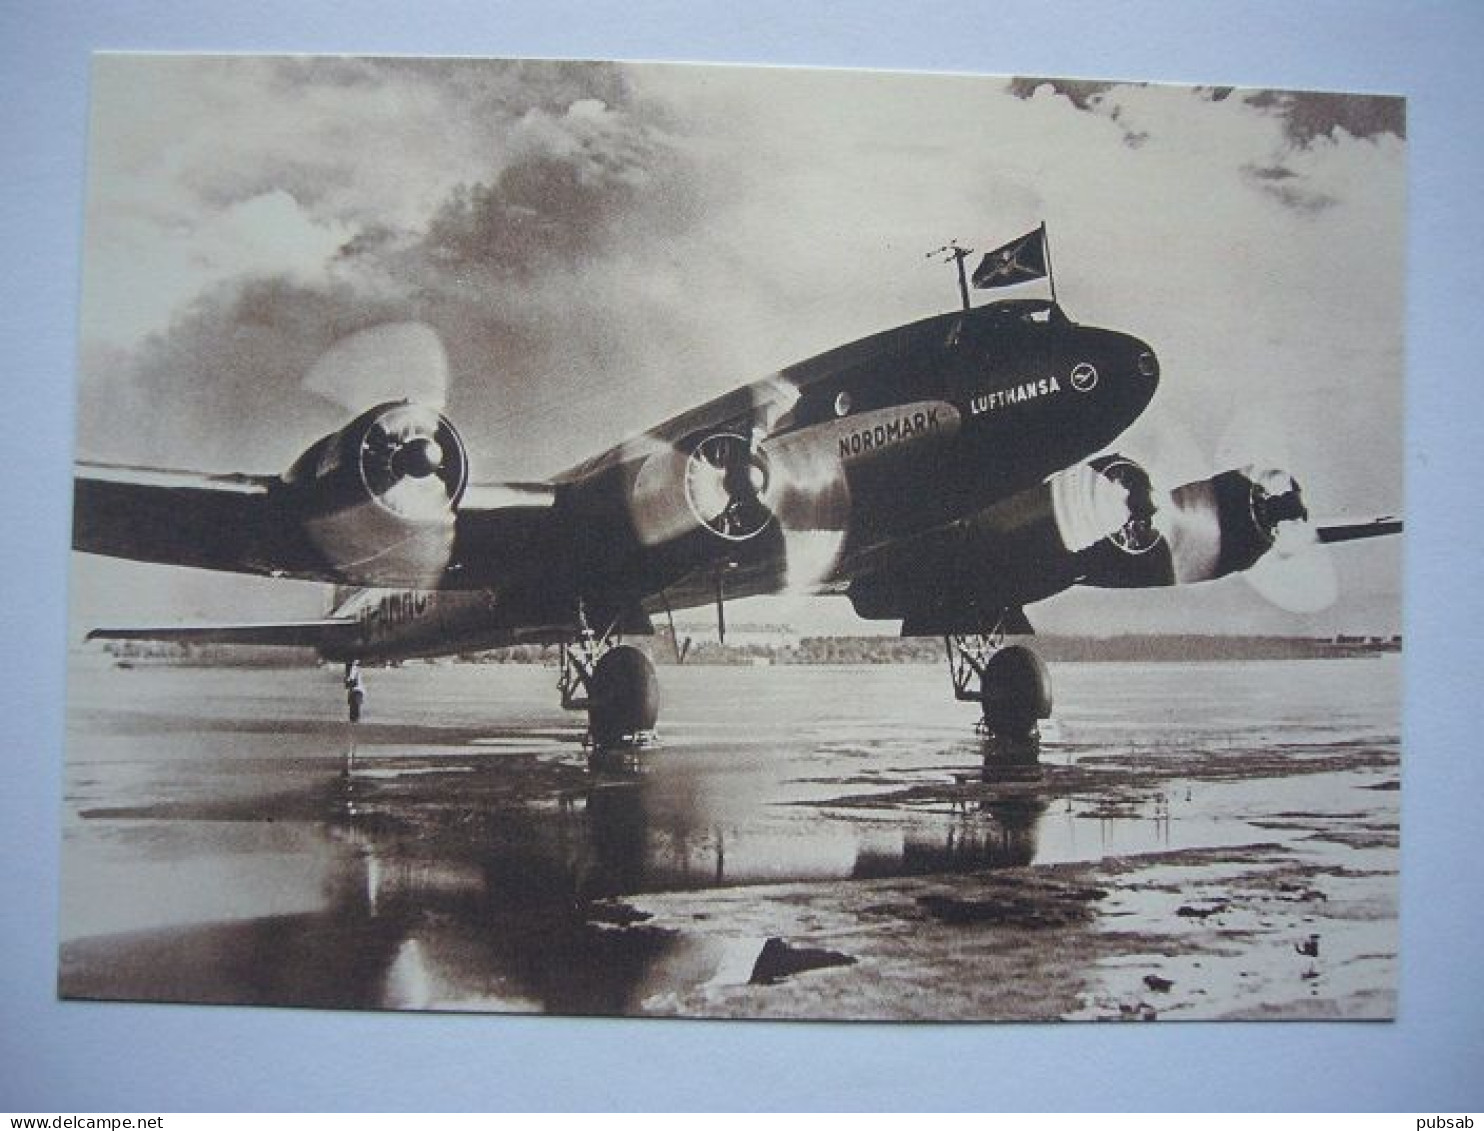 Avion / Airplane / LUFTHANSA / Focke-Wulf 200 "Condor" - 1919-1938: Between Wars